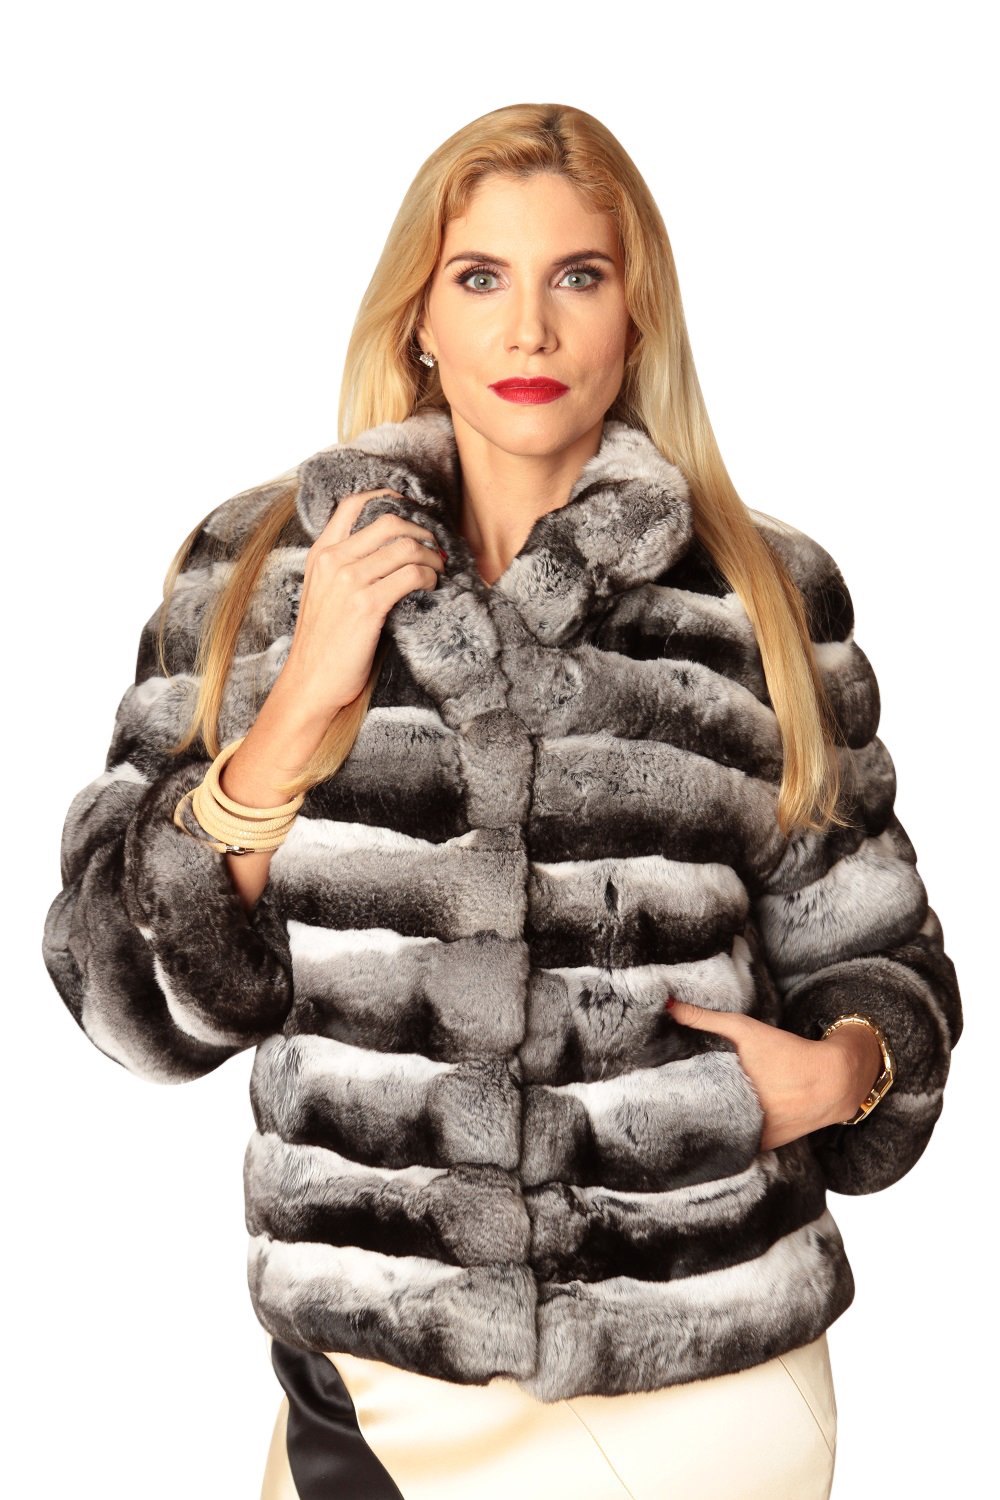 Chateau de Laquant Chinchilla Mink Fur Coats Mink Jacket for Wom параллель импортные товары 